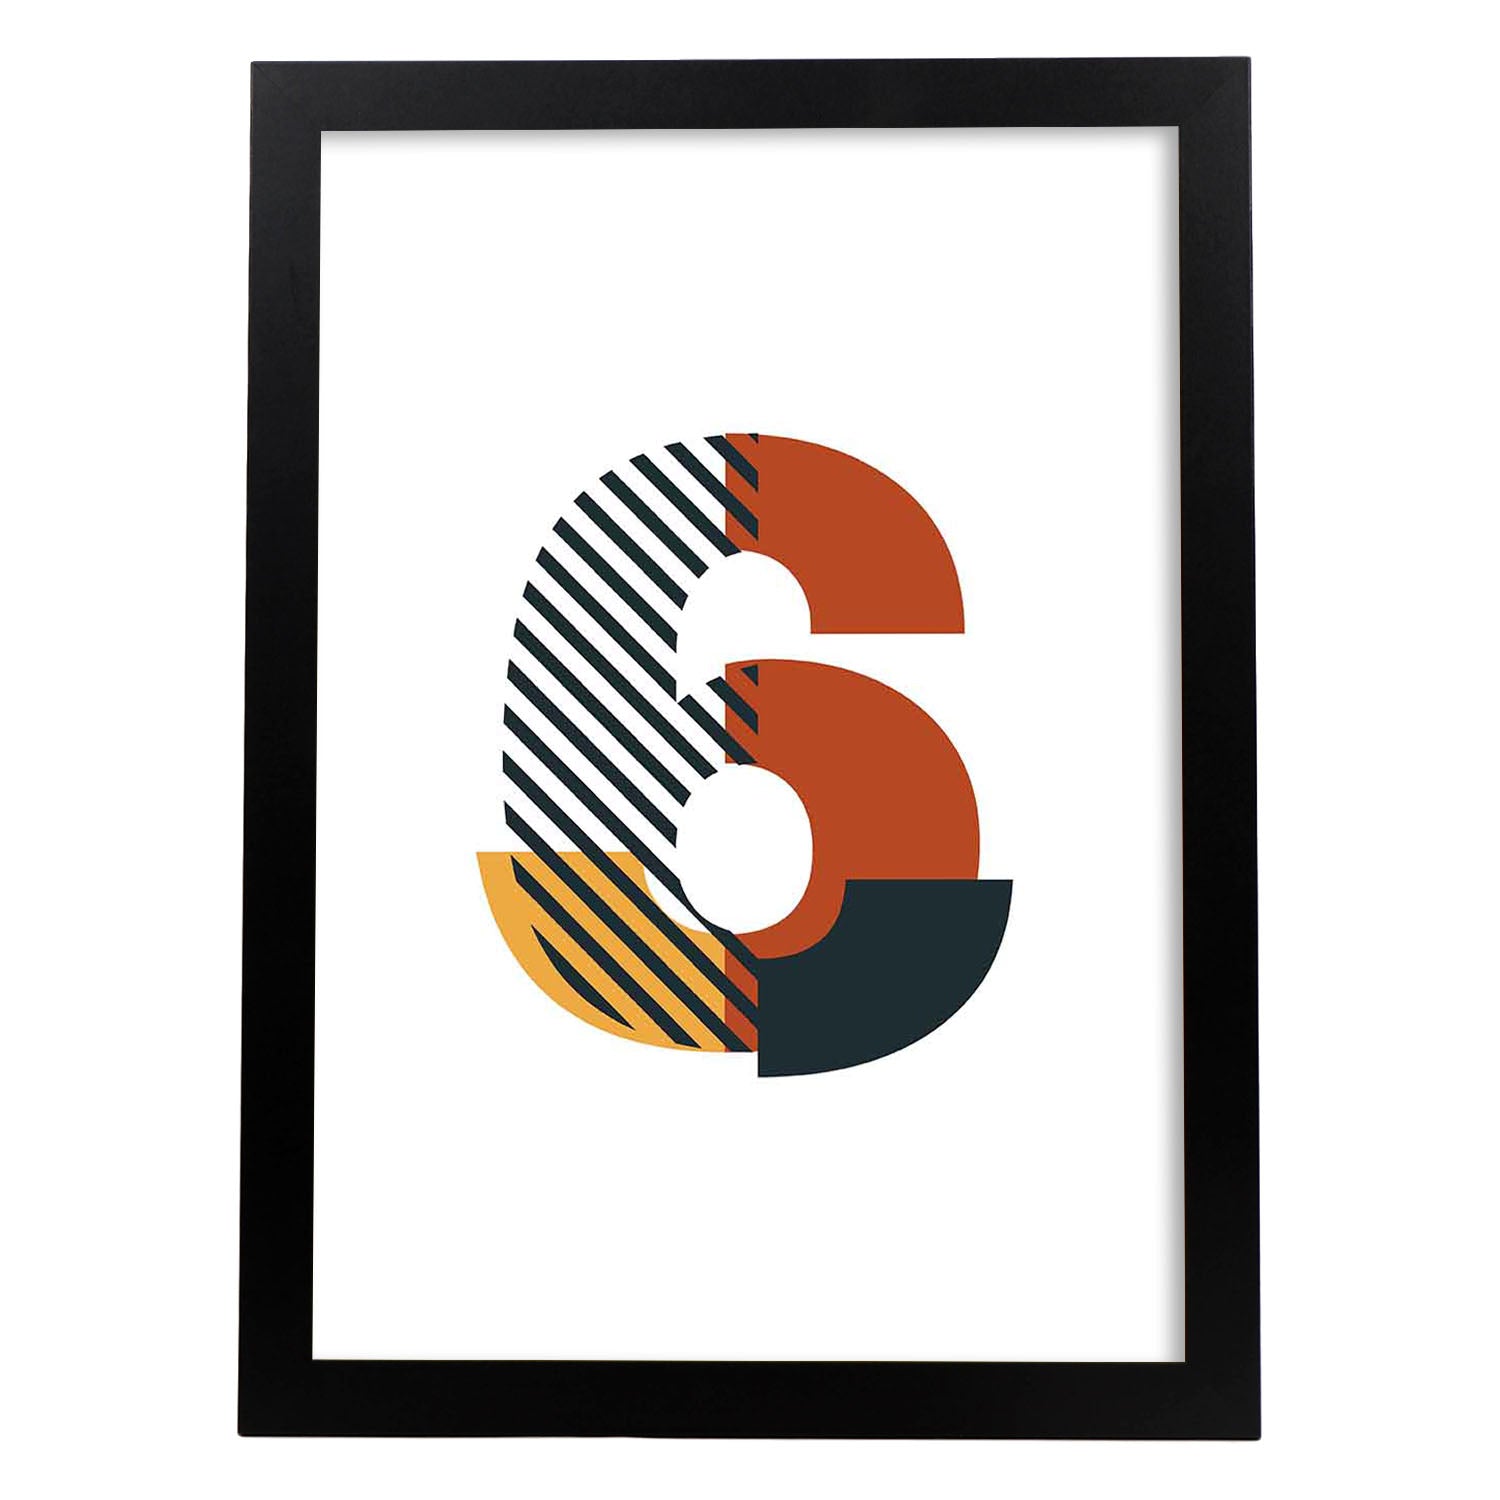 Poster de número 6. Lámina estilo Geometria con imágenes del alfabeto.-Artwork-Nacnic-A3-Marco Negro-Nacnic Estudio SL